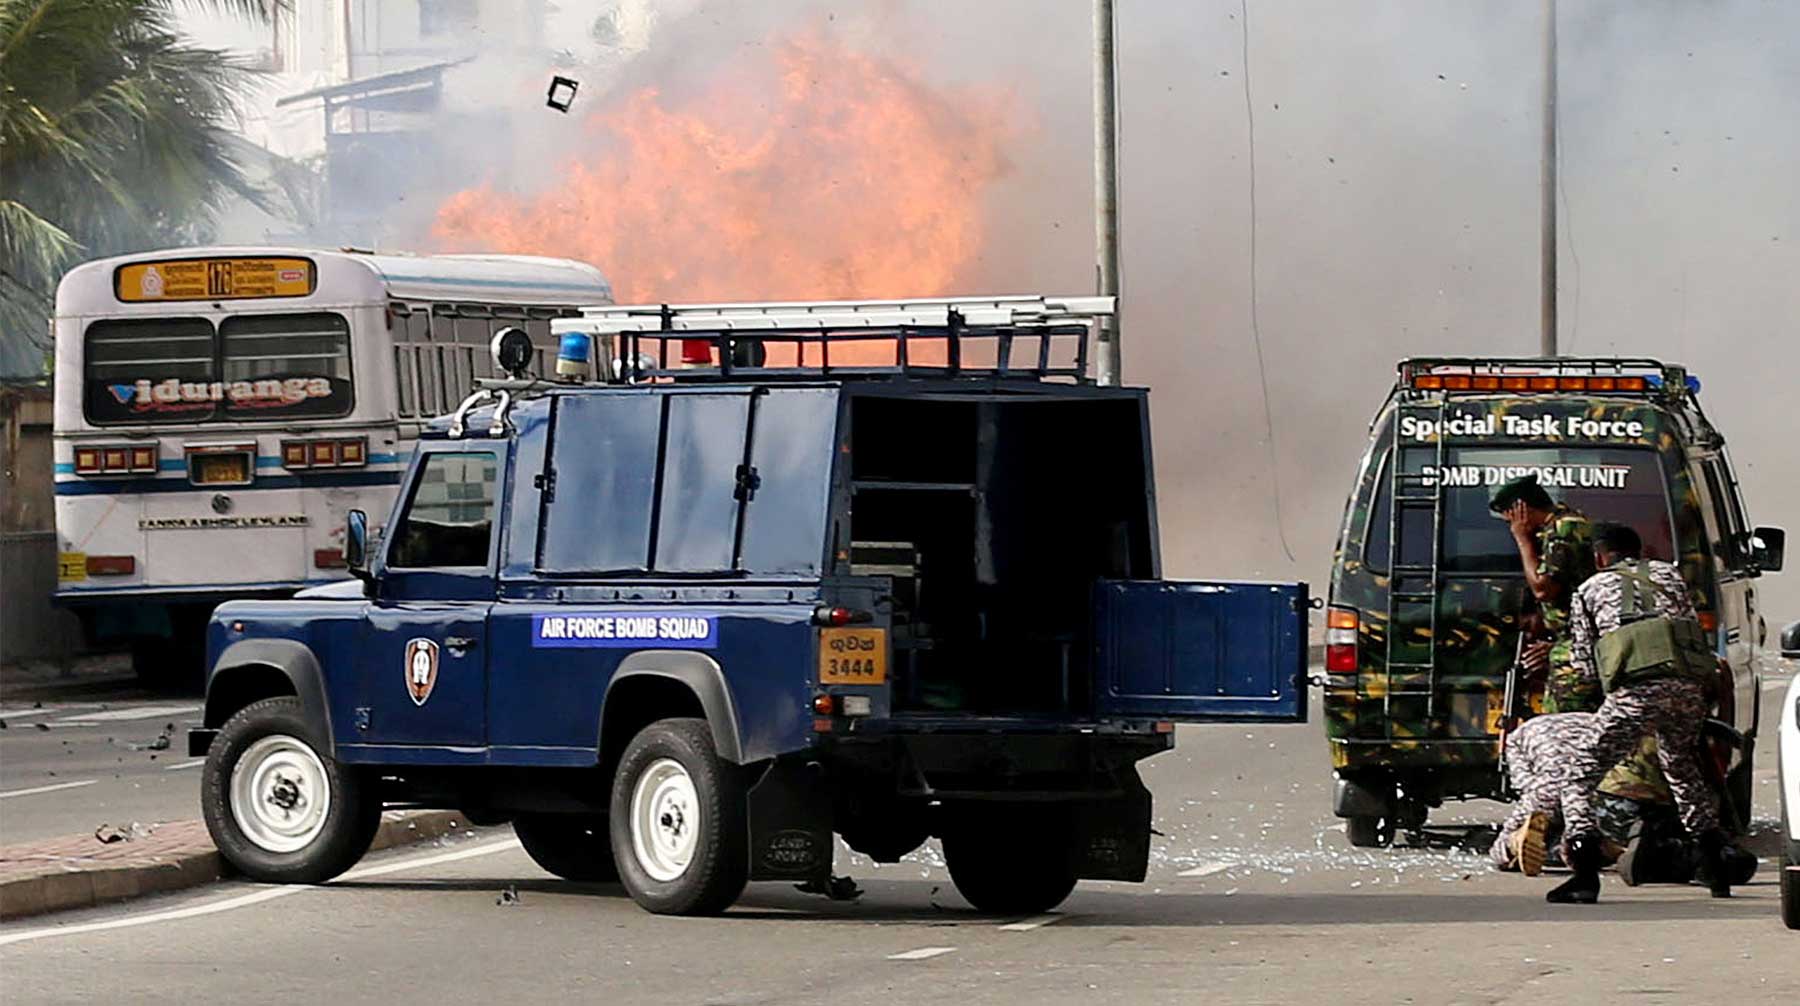 Взрывное устройство находилось в кузове грузовика Фото: © GLOBAL LOOK press / Lahiru Harshana